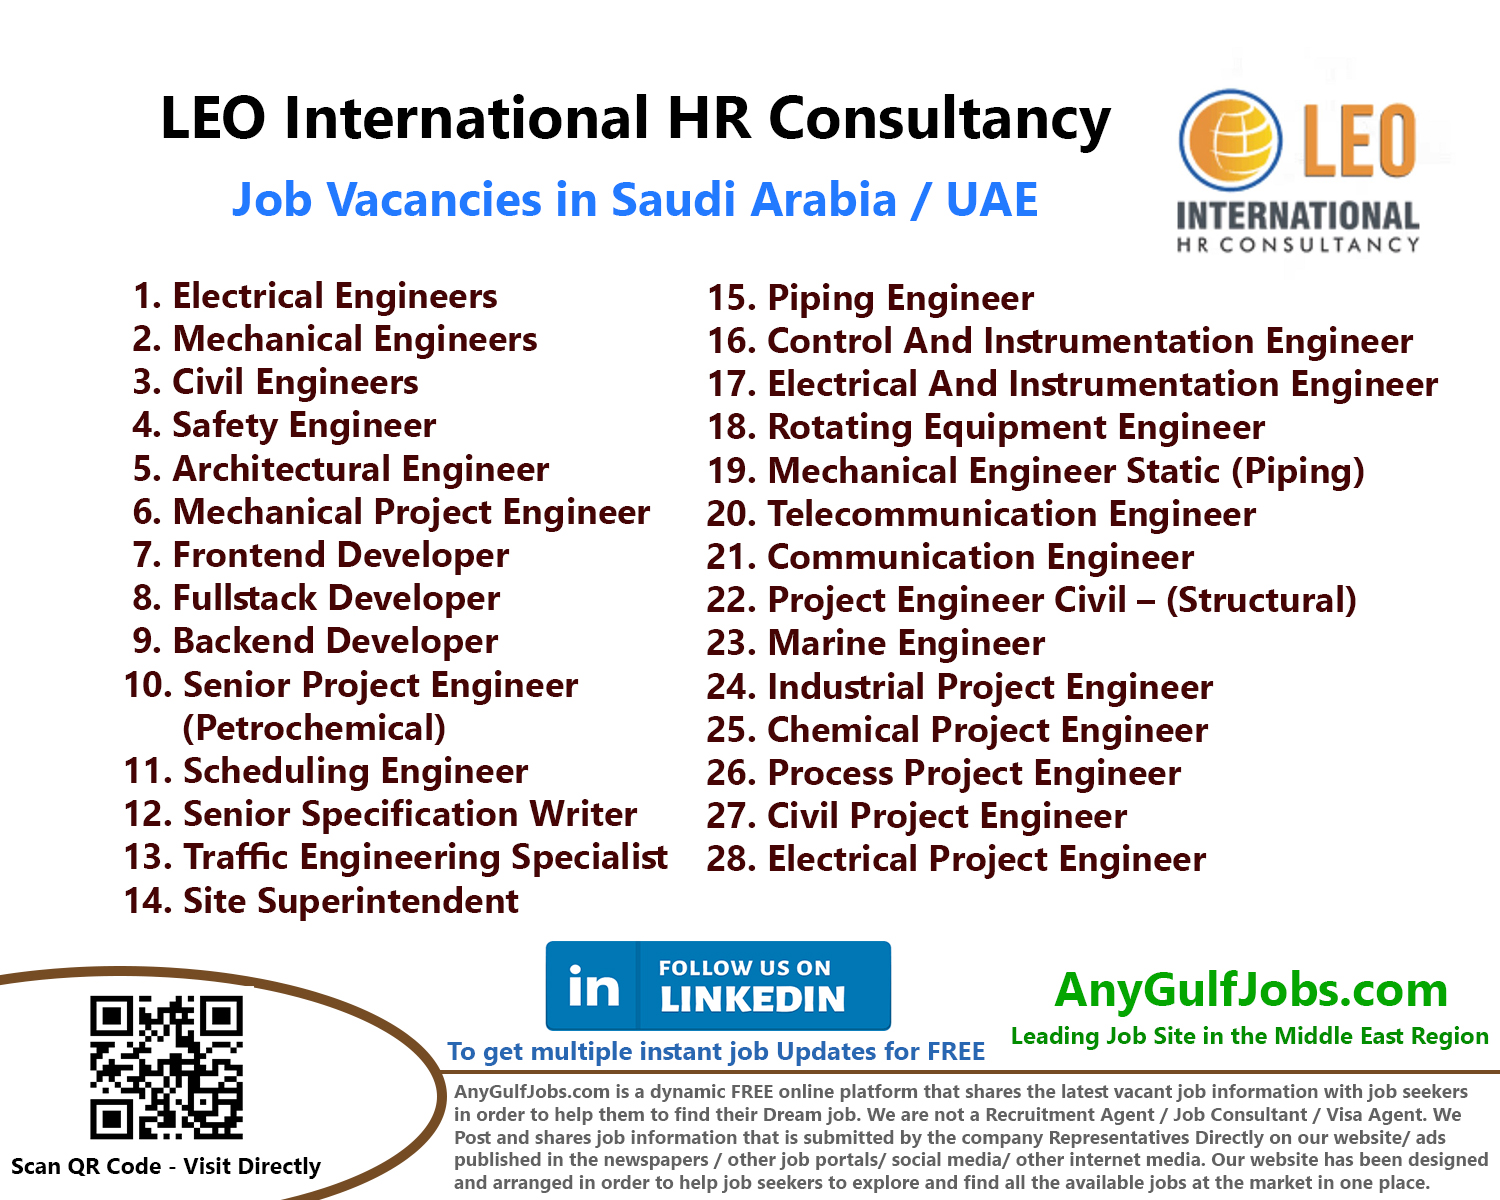 LEO International HR Consultancy Job Vacancies in Saudi Arabia / UAE